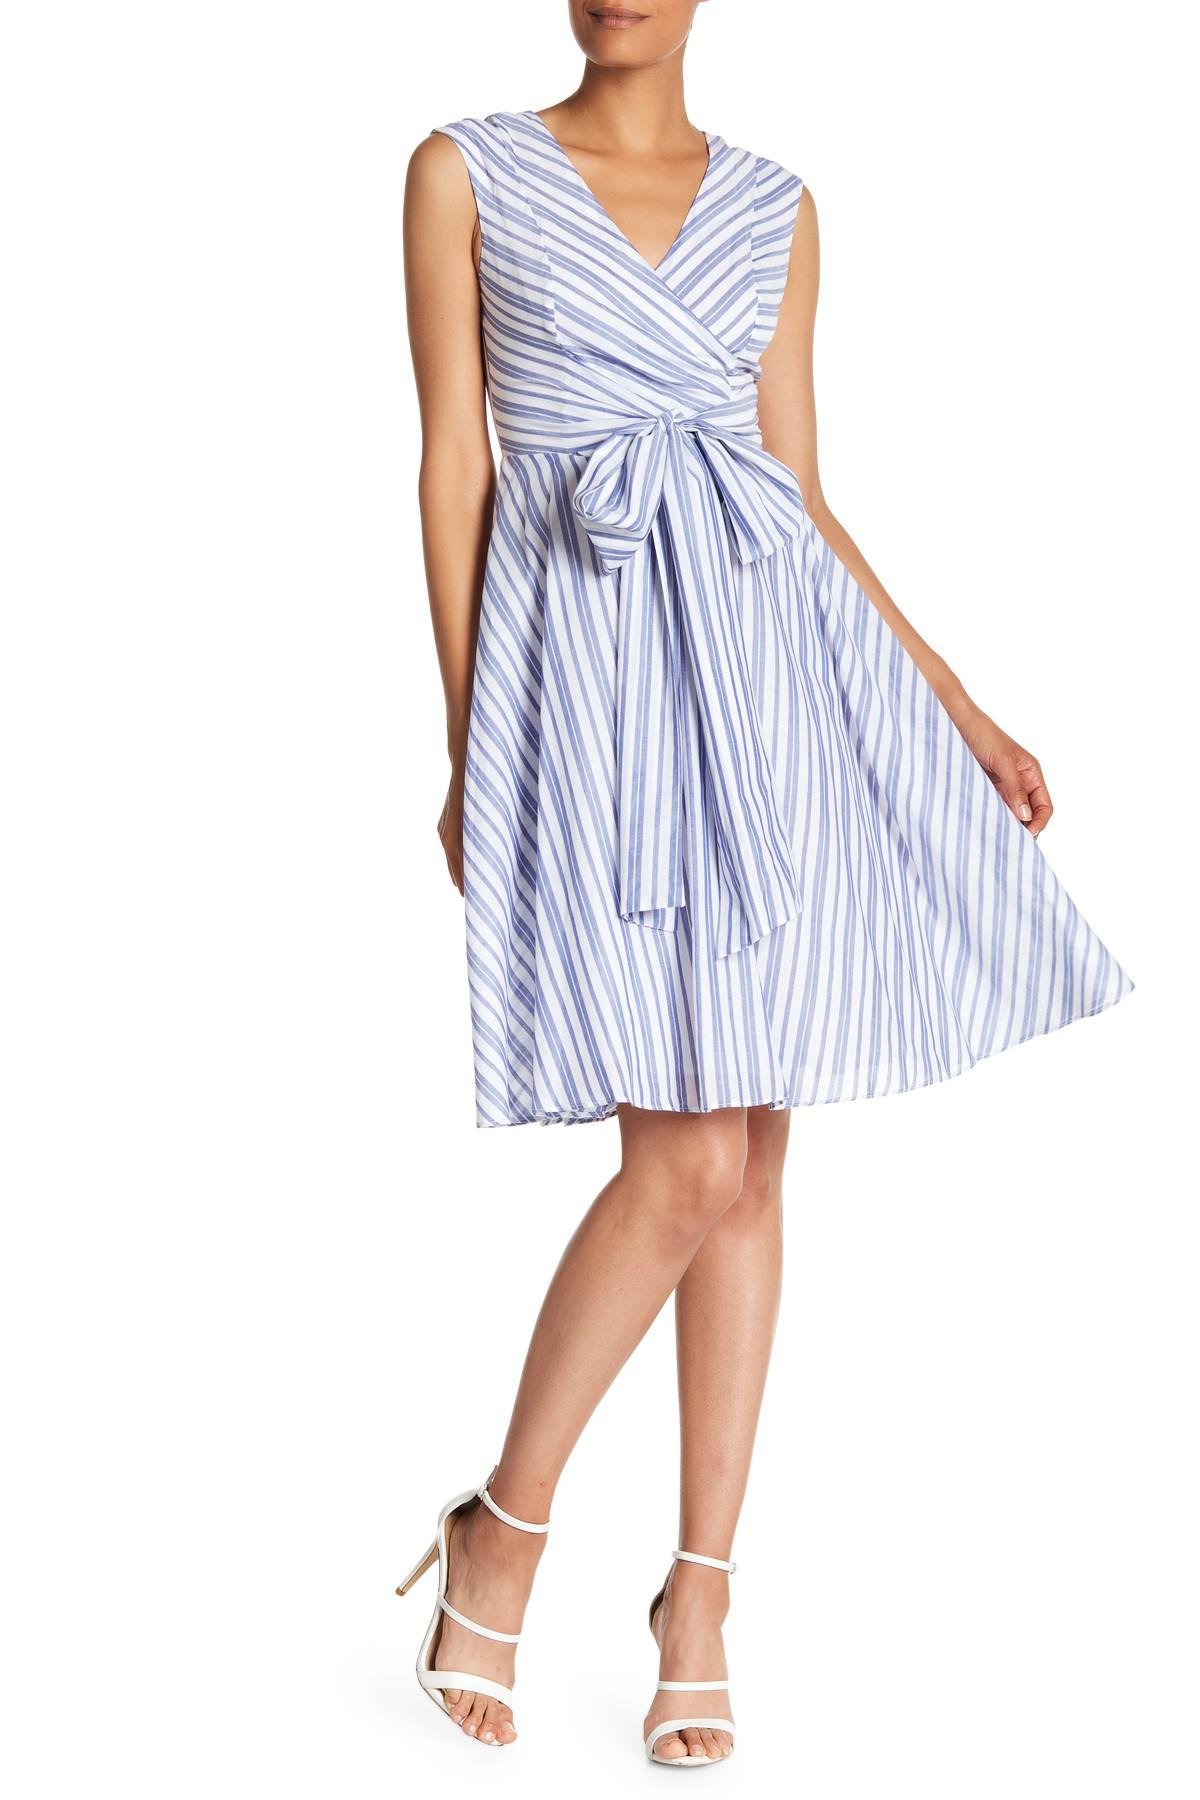 calvin klein blue and white striped dress